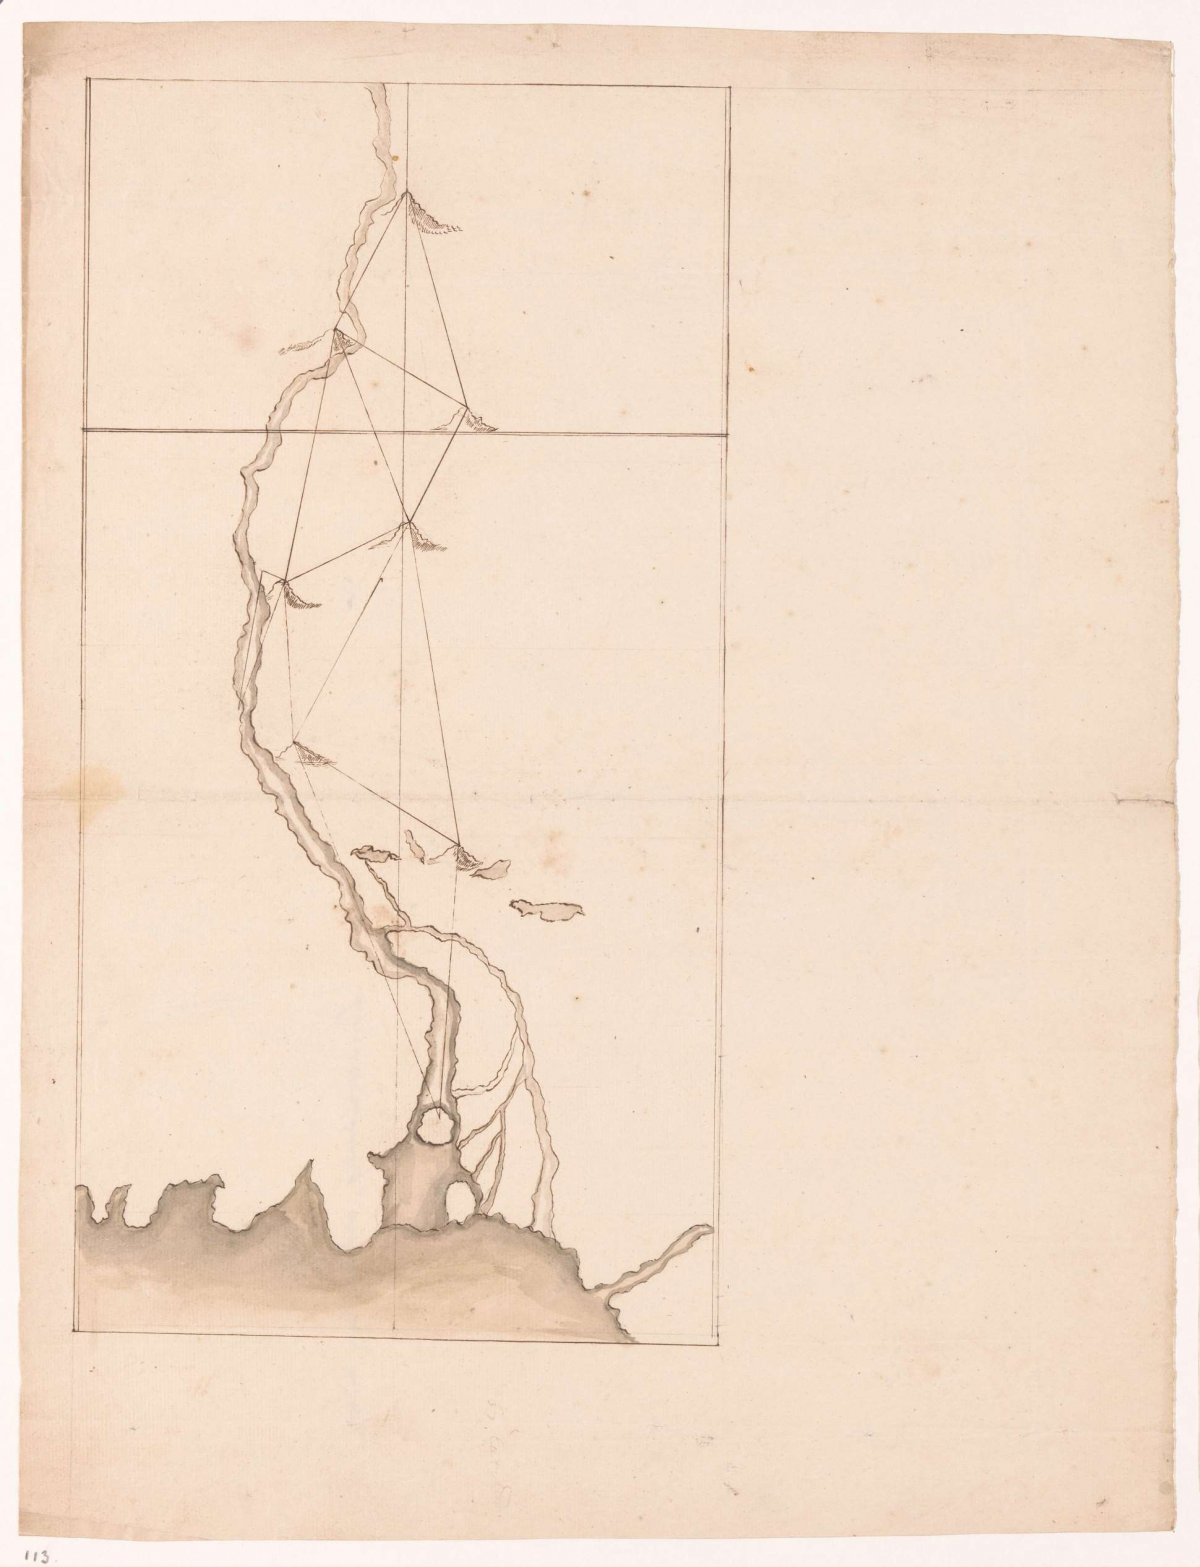 Triangulation along a river, Jan Brandes, 1770 - 1808